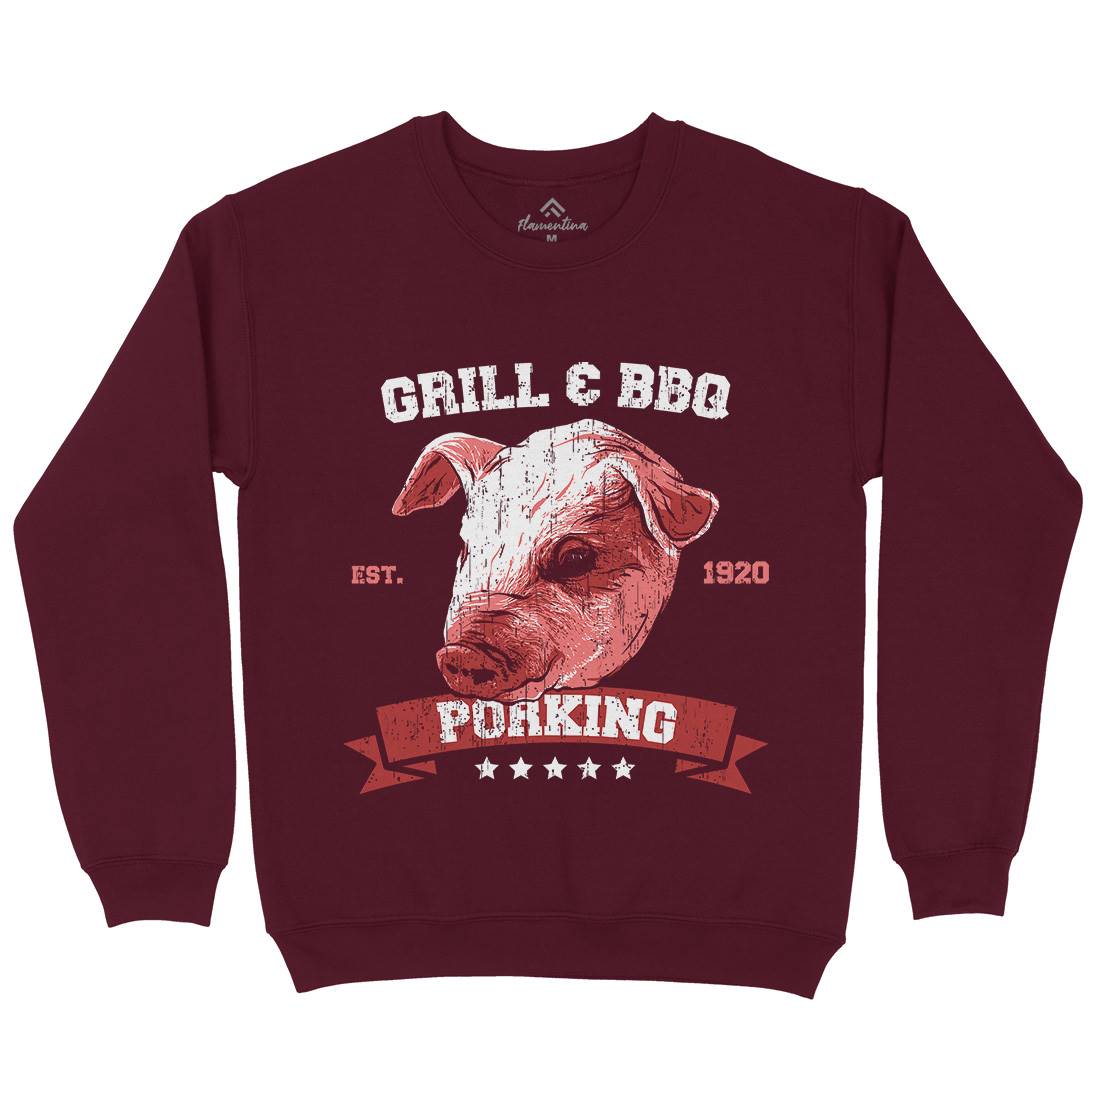 Pork King Kids Crew Neck Sweatshirt Animals B751